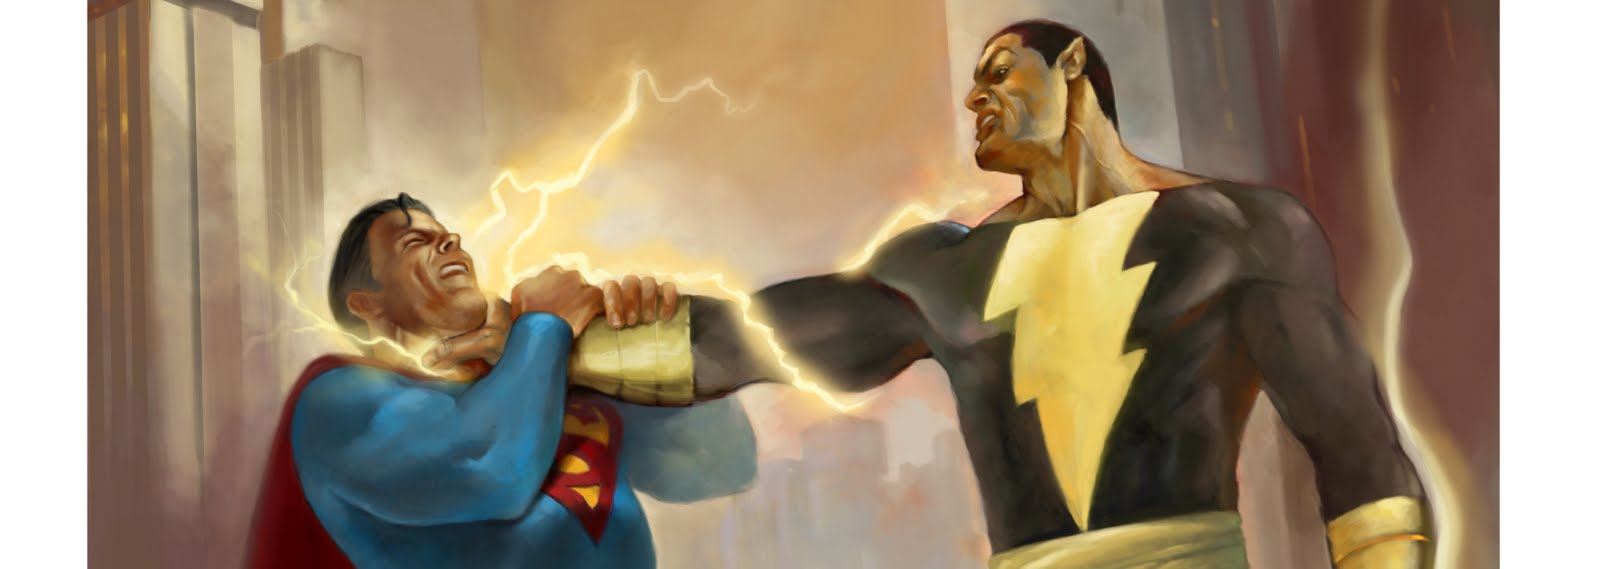 Black Adam vs Superman